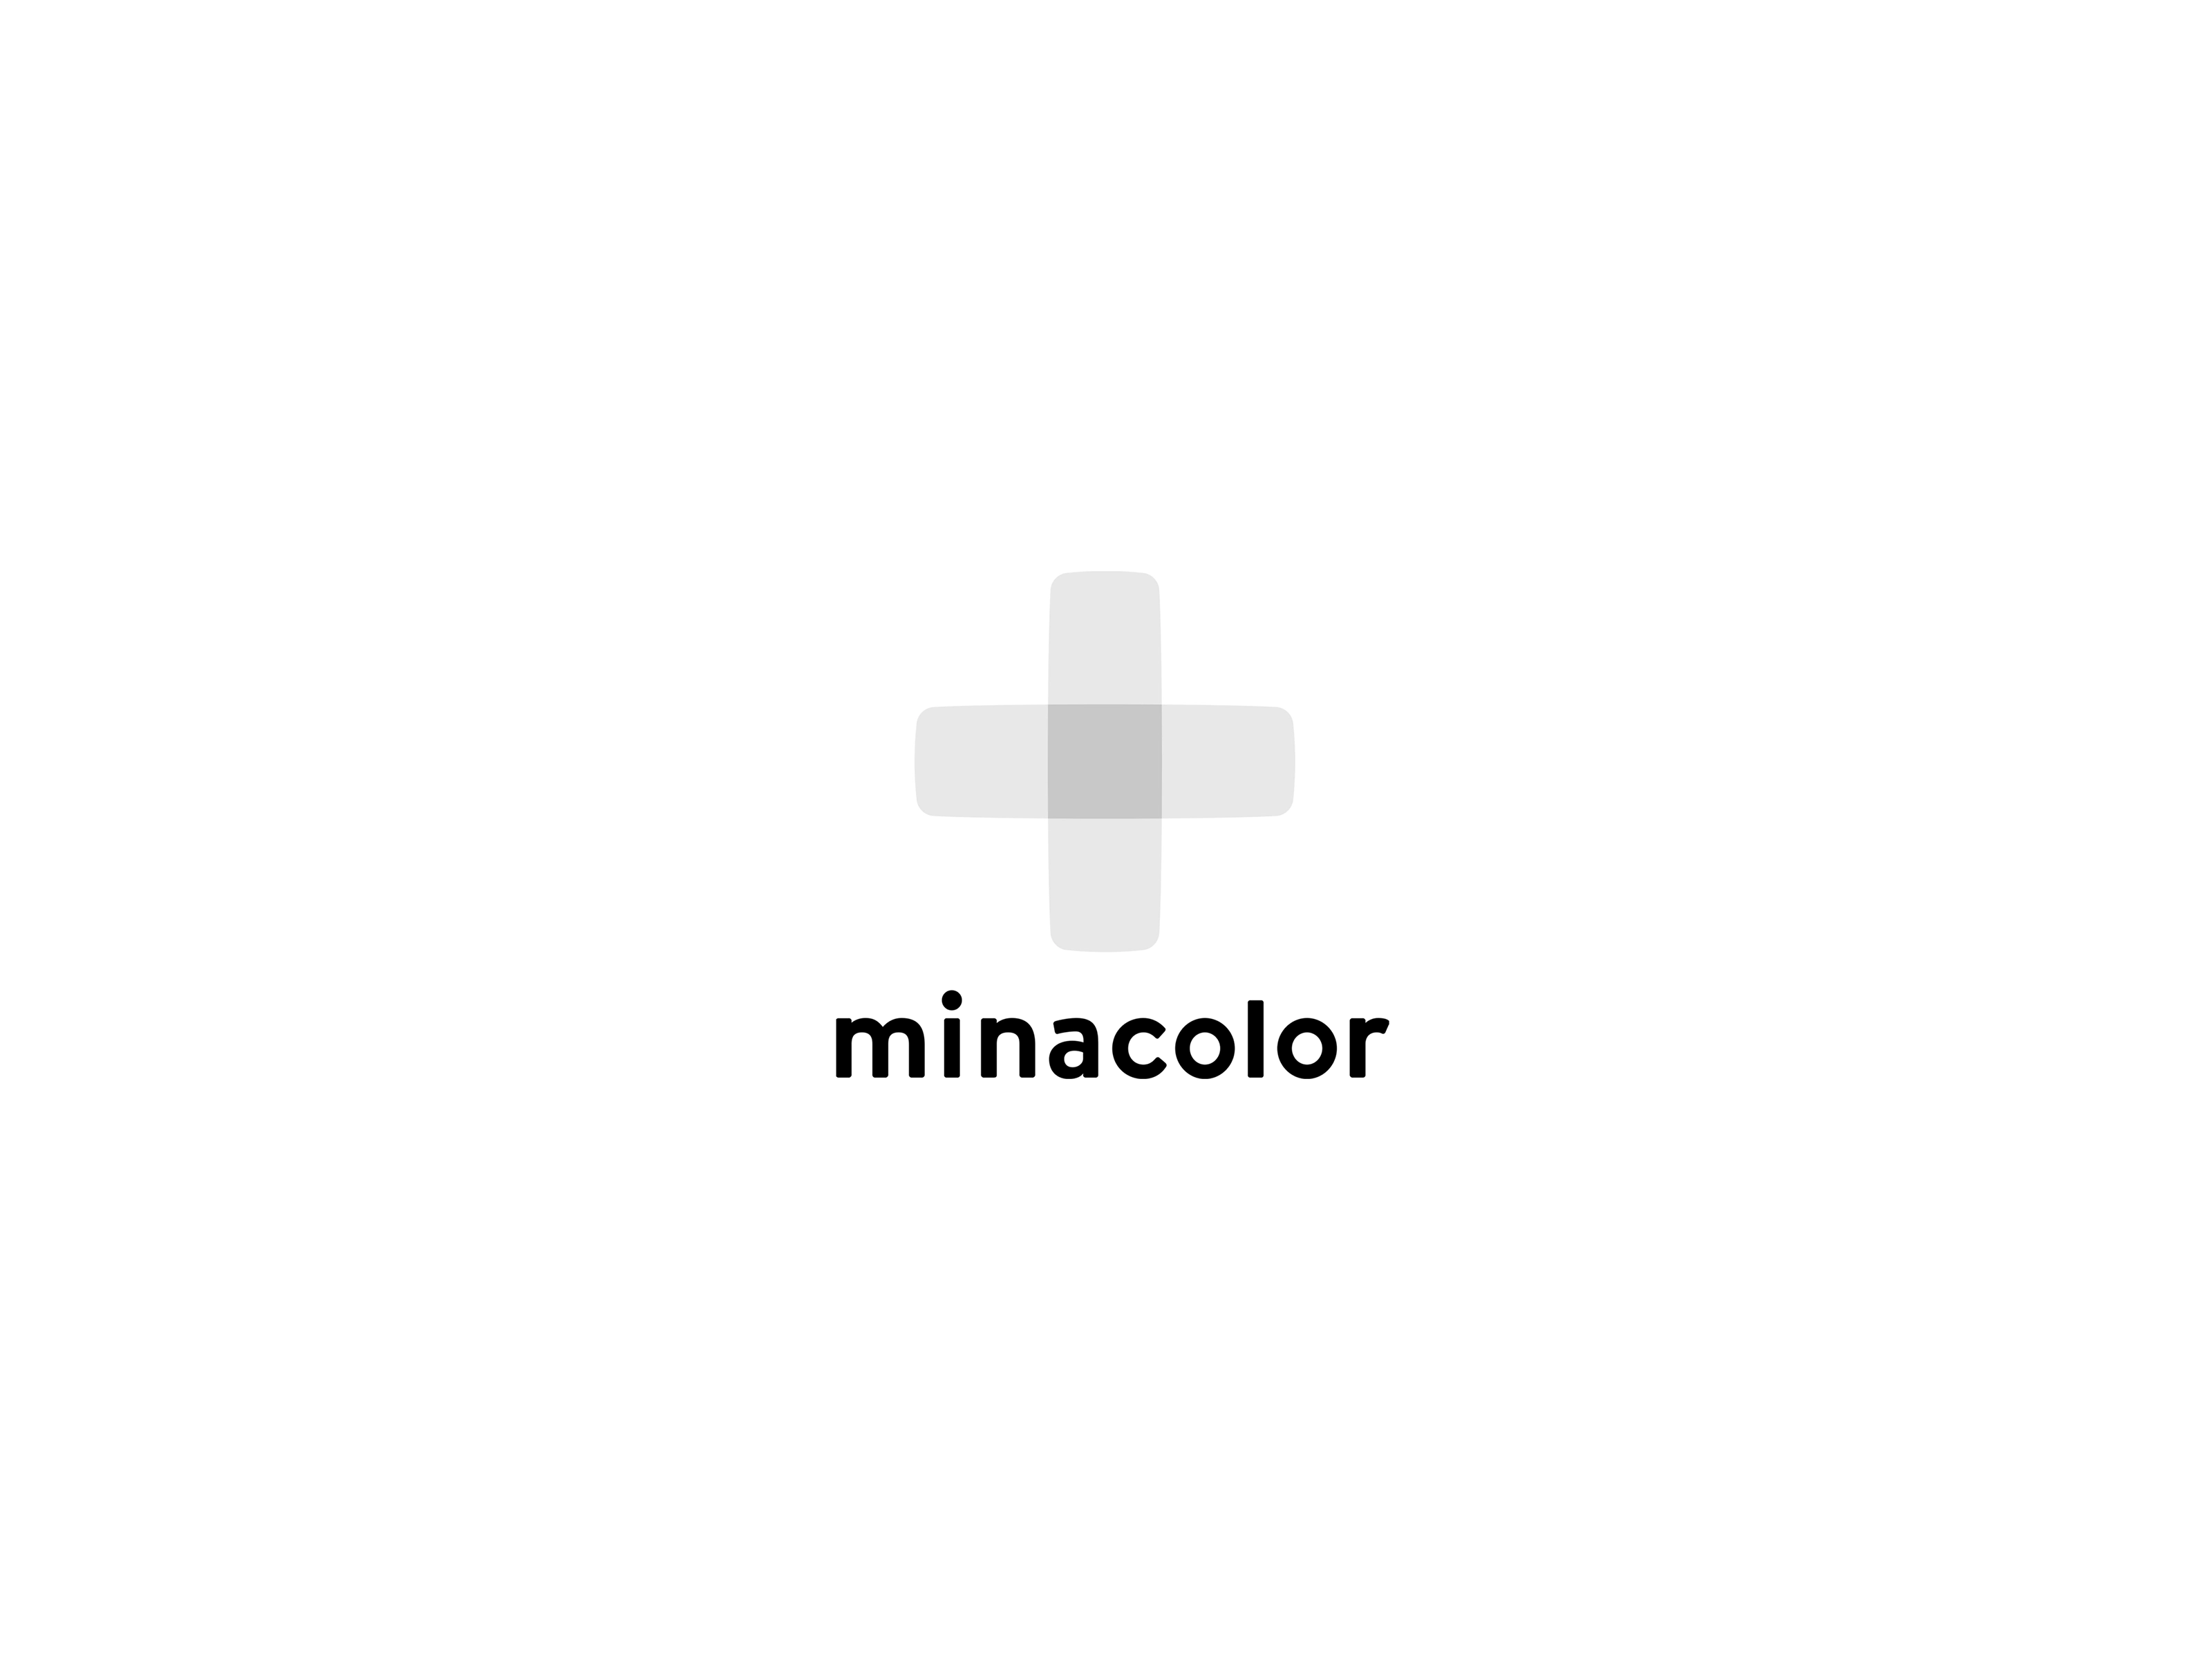 minacolor